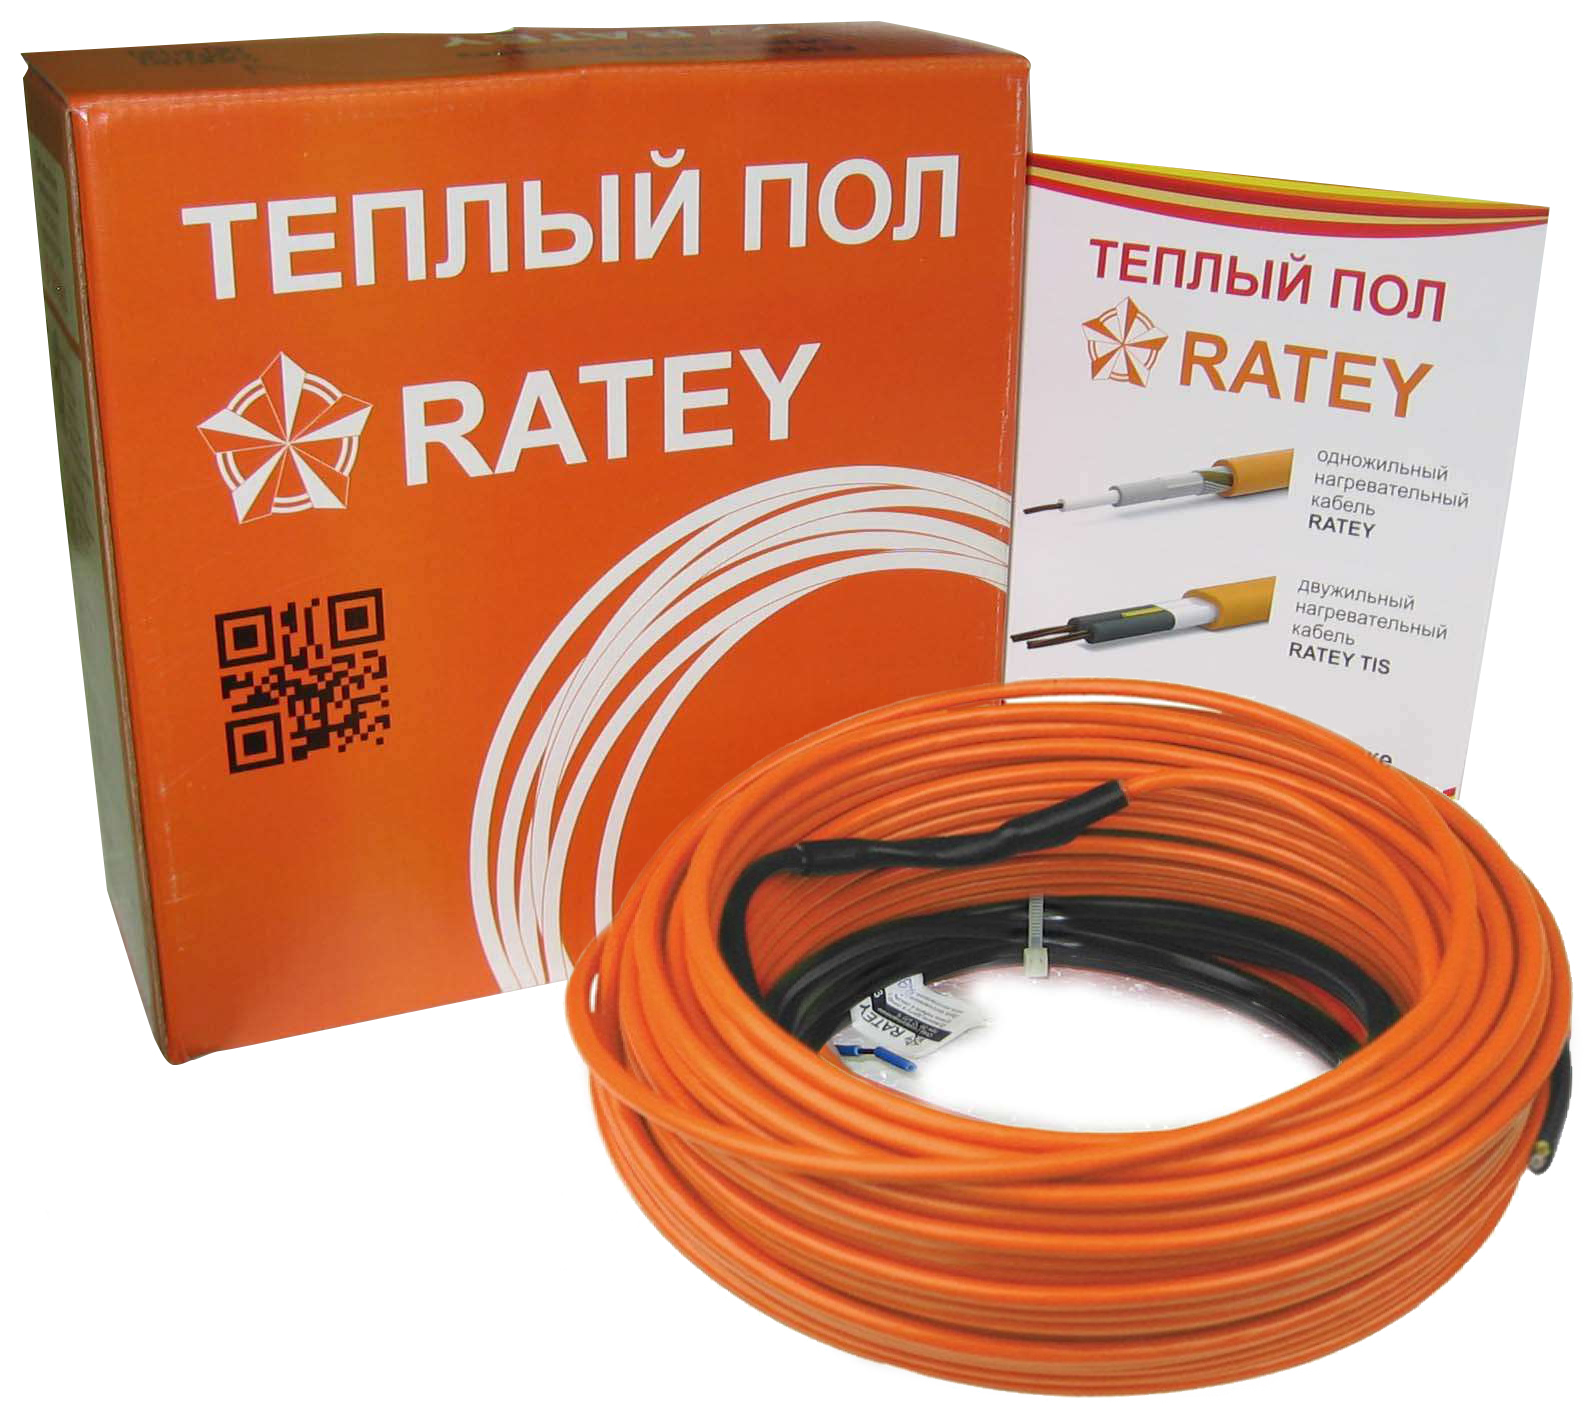 Электрический теплый пол Ratey RD1 0.560